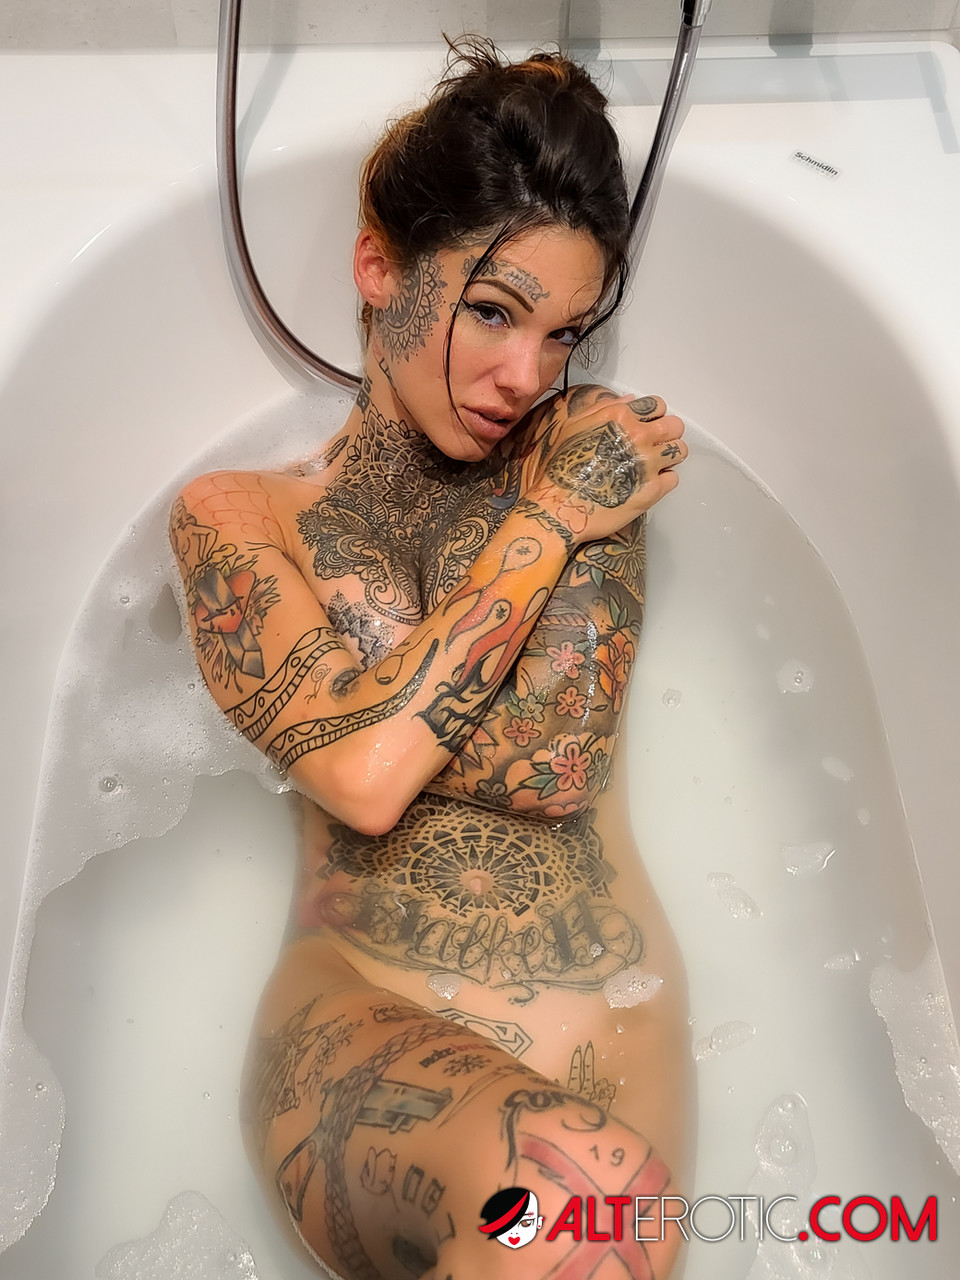 Tattooed girl Lucy Zzz takes a bath after POV sex in a bathtub 色情照片 #422562628 | Alt Erotic Pics, Lucy Zzz, Tattoo, 手机色情